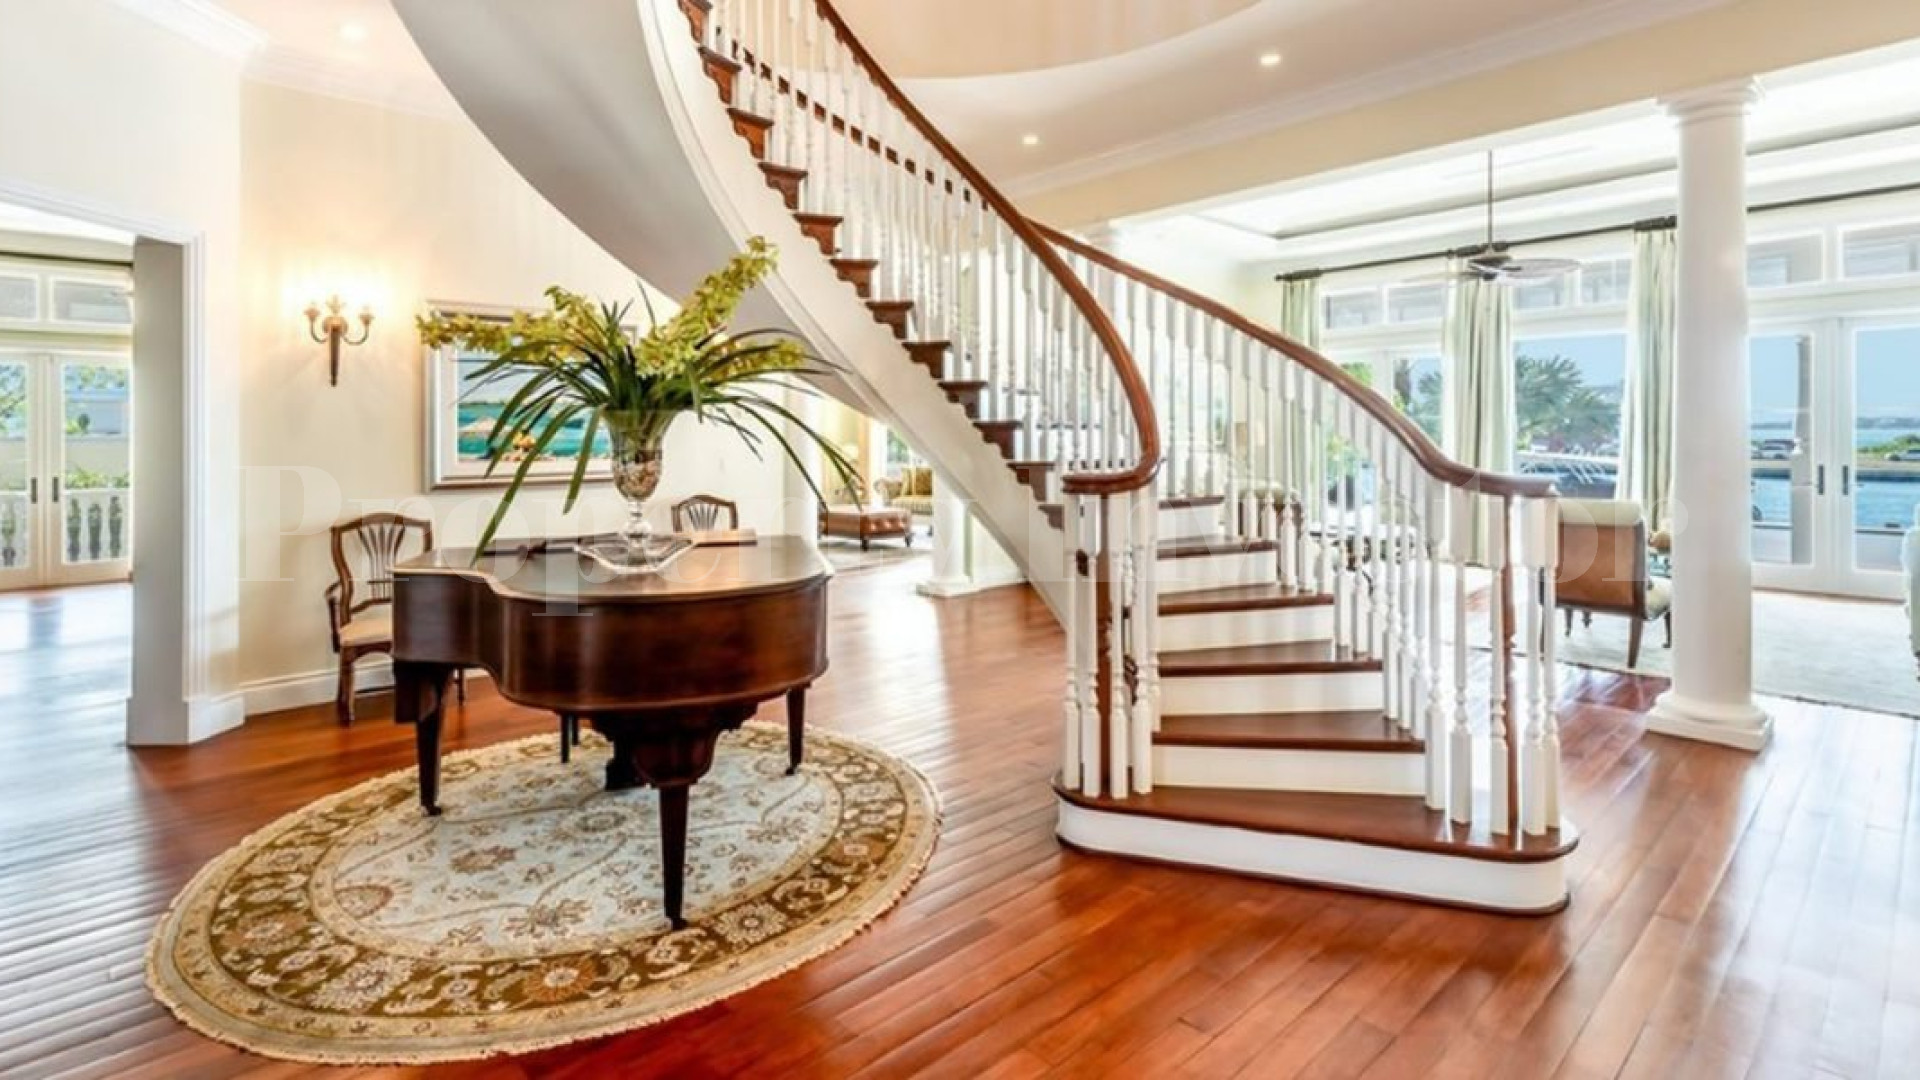 Impressive 6 Bedroom Luxury Oceanfront Villa Located in Prestigious Gated Community for Sale on Paradise Island, Bahamas